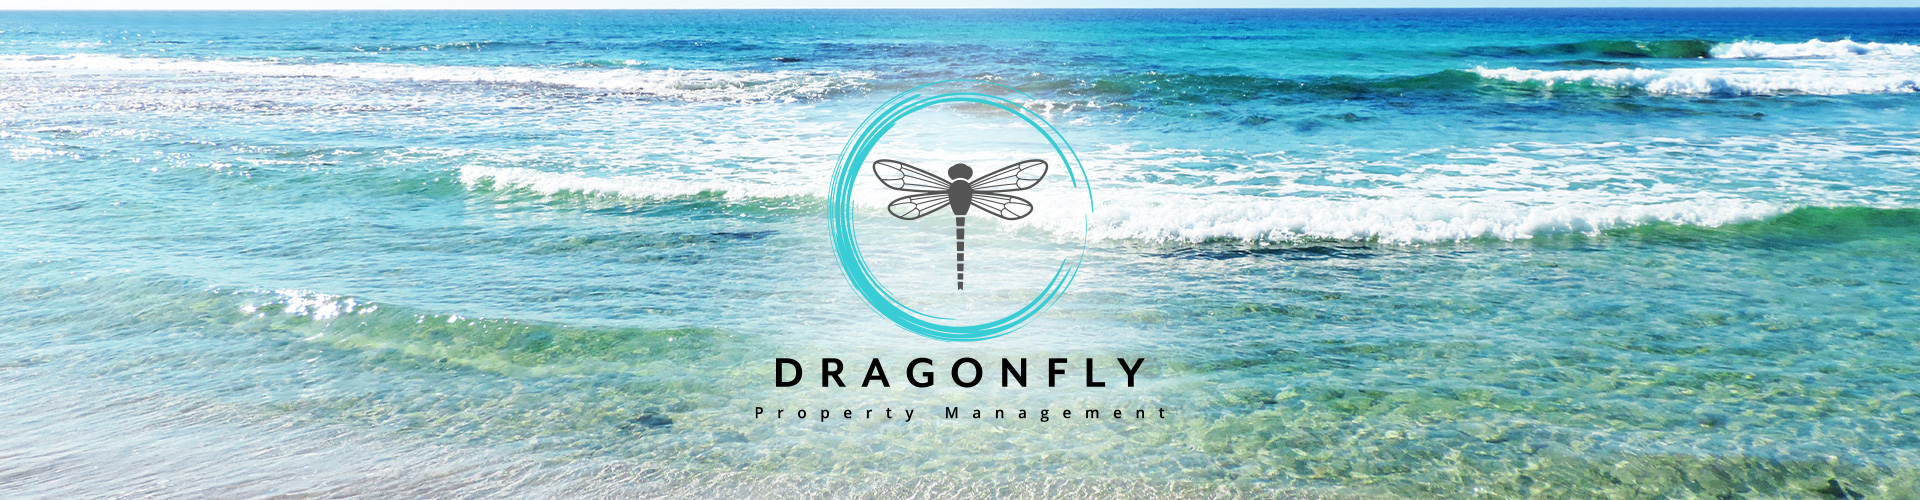 Dragonfly Property Management PCB Banner